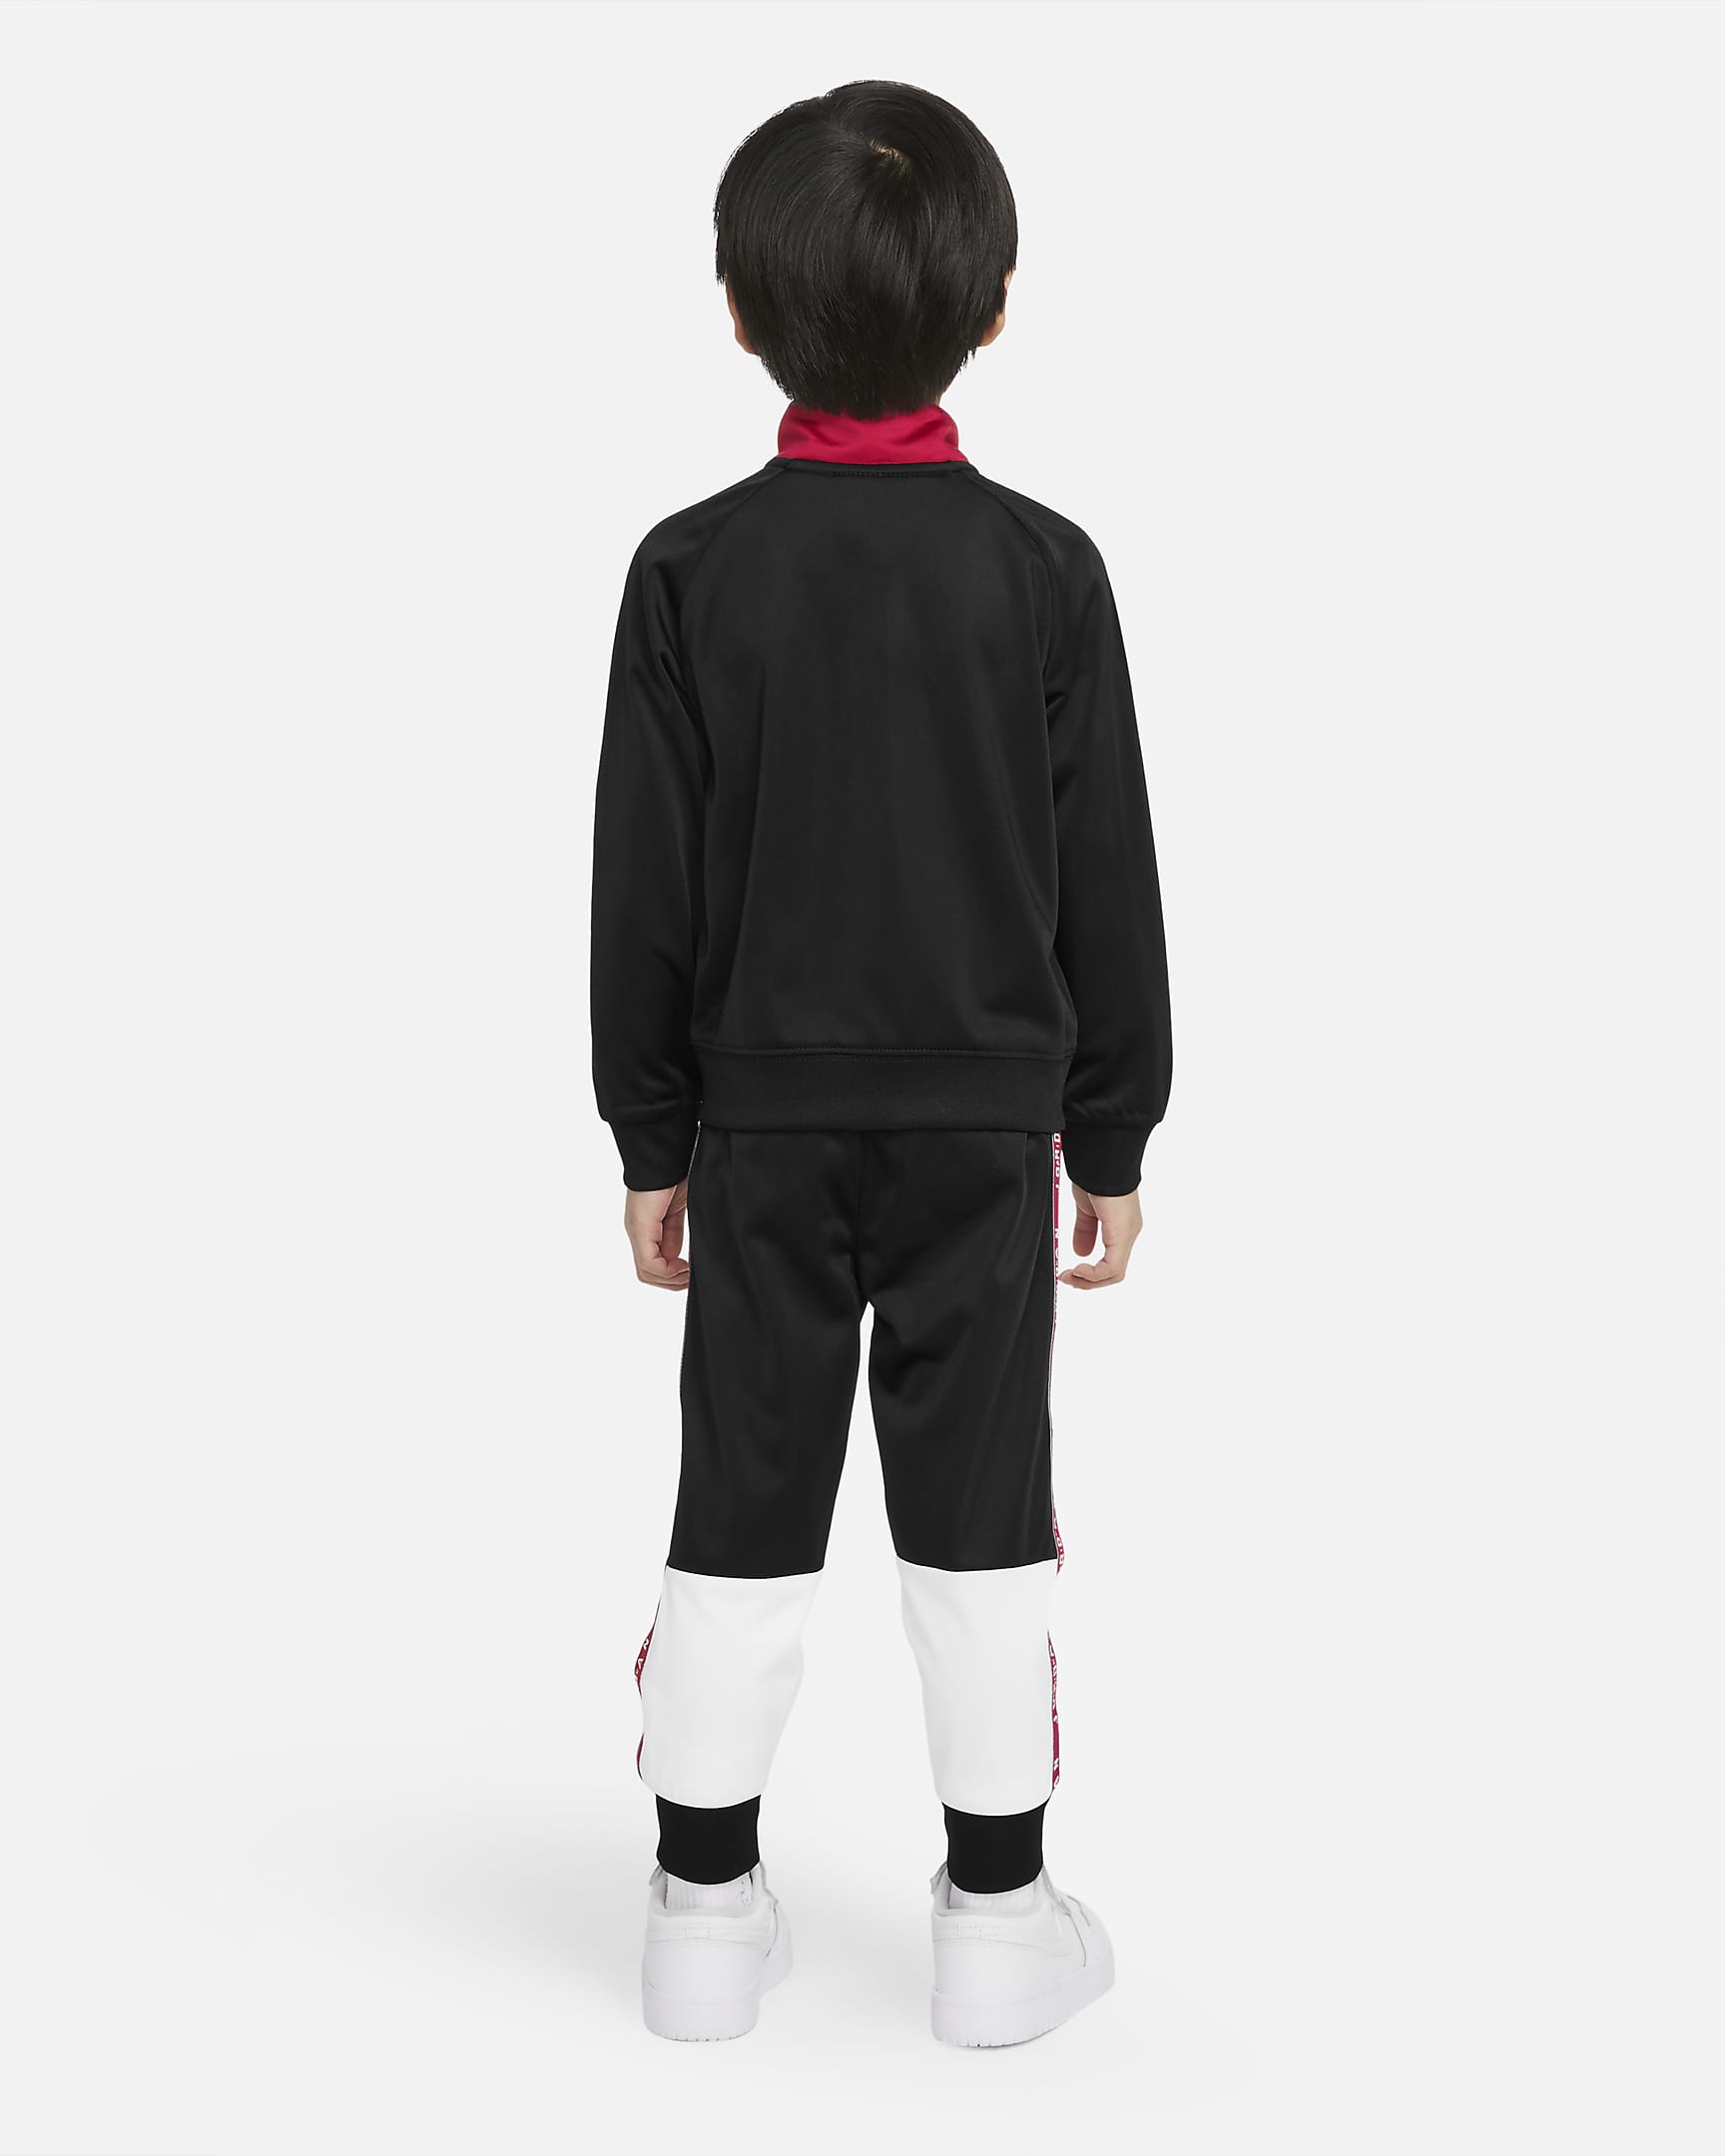 Jordan Toddler Tracksuit Set. Nike.com